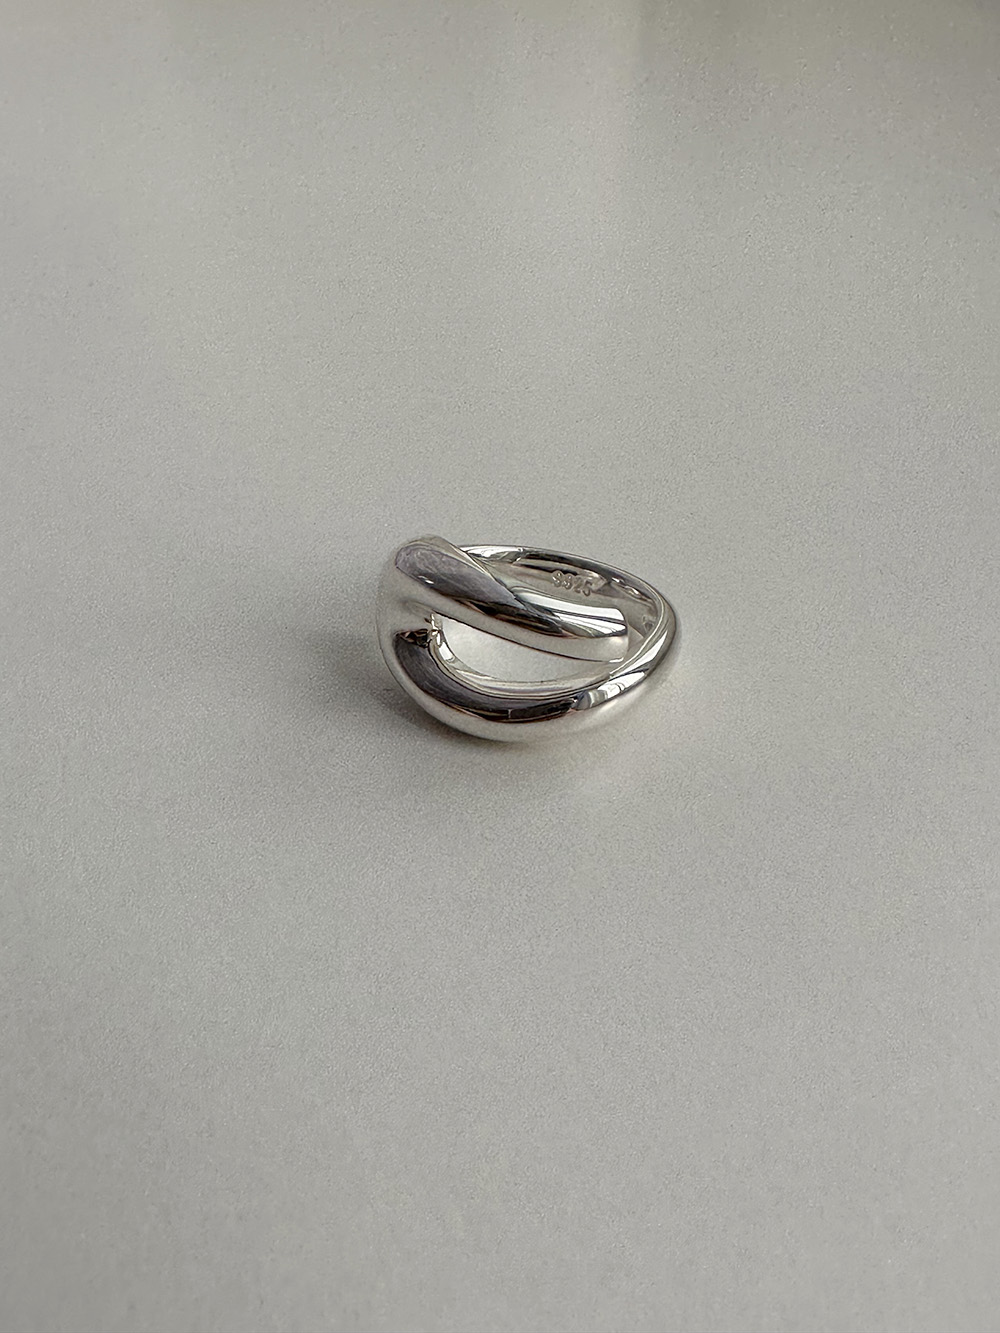 [92.5 silver] U turn ring